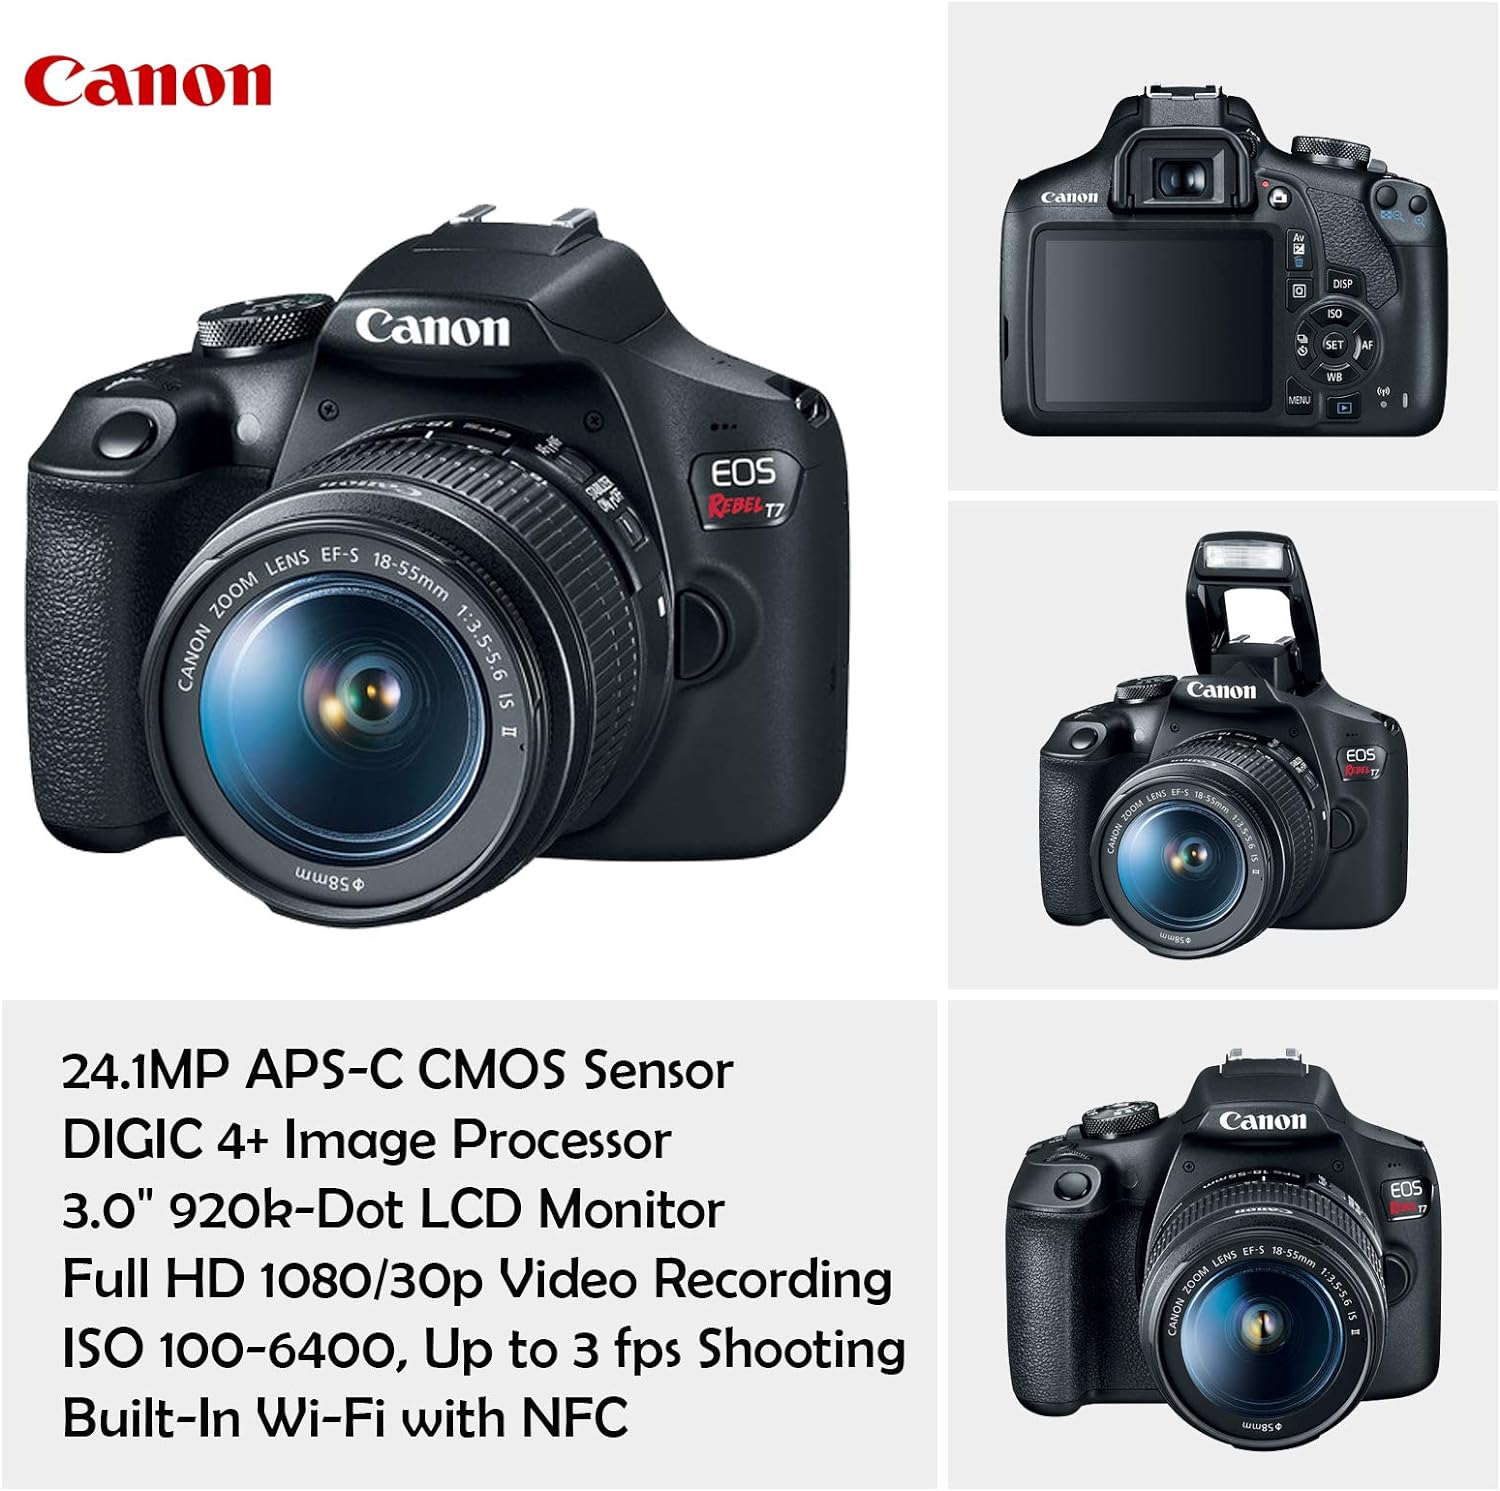 Canon EOS Rebel T7 DSLR Camera: A Comprehensive Review